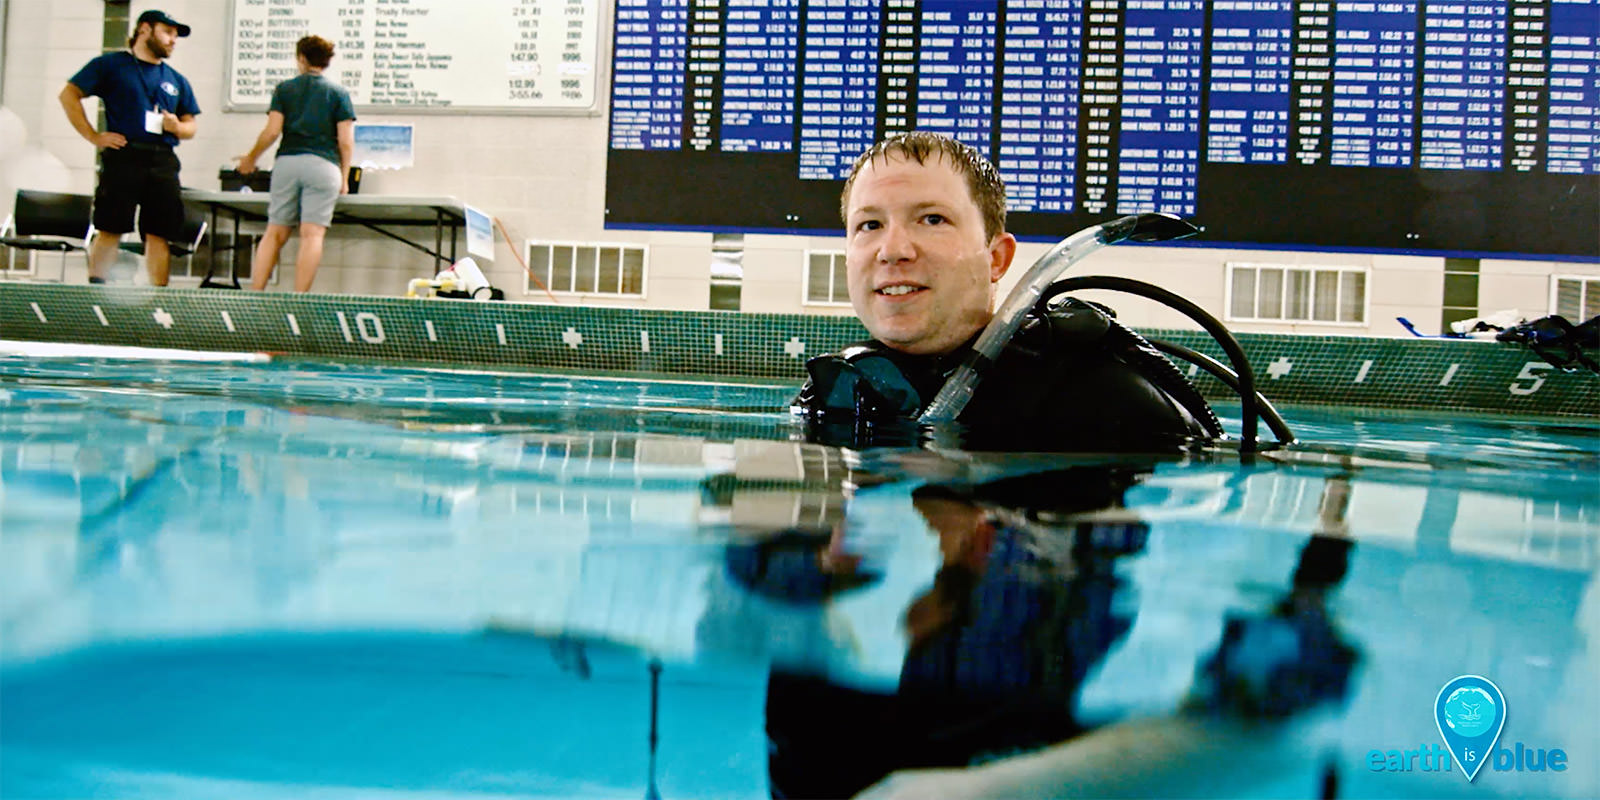 john caplis wearing dive gear in a pool